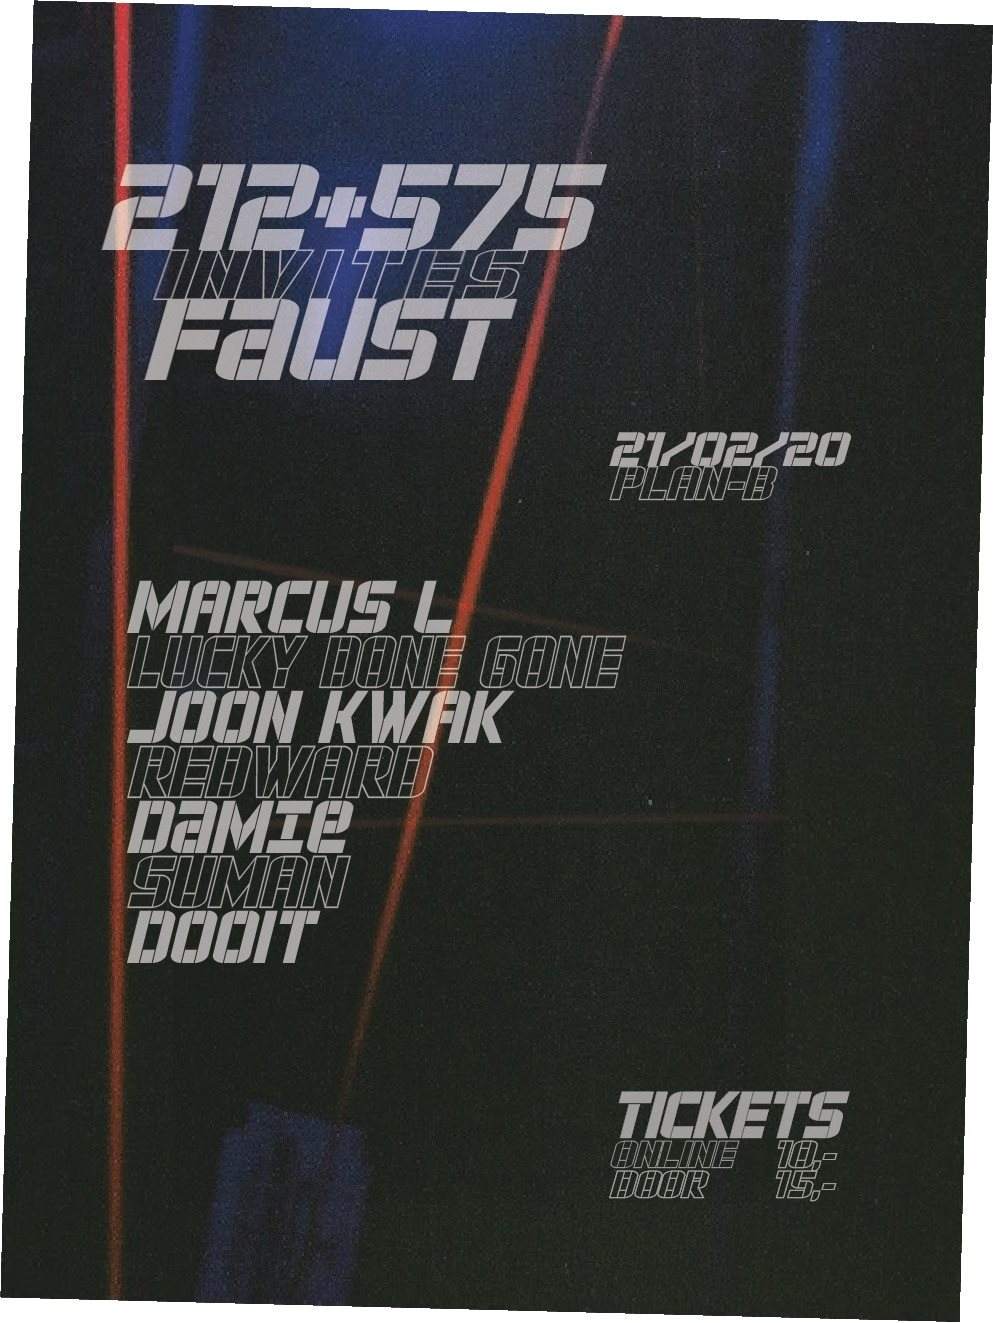 212 + 575 Invites Faust - Página frontal